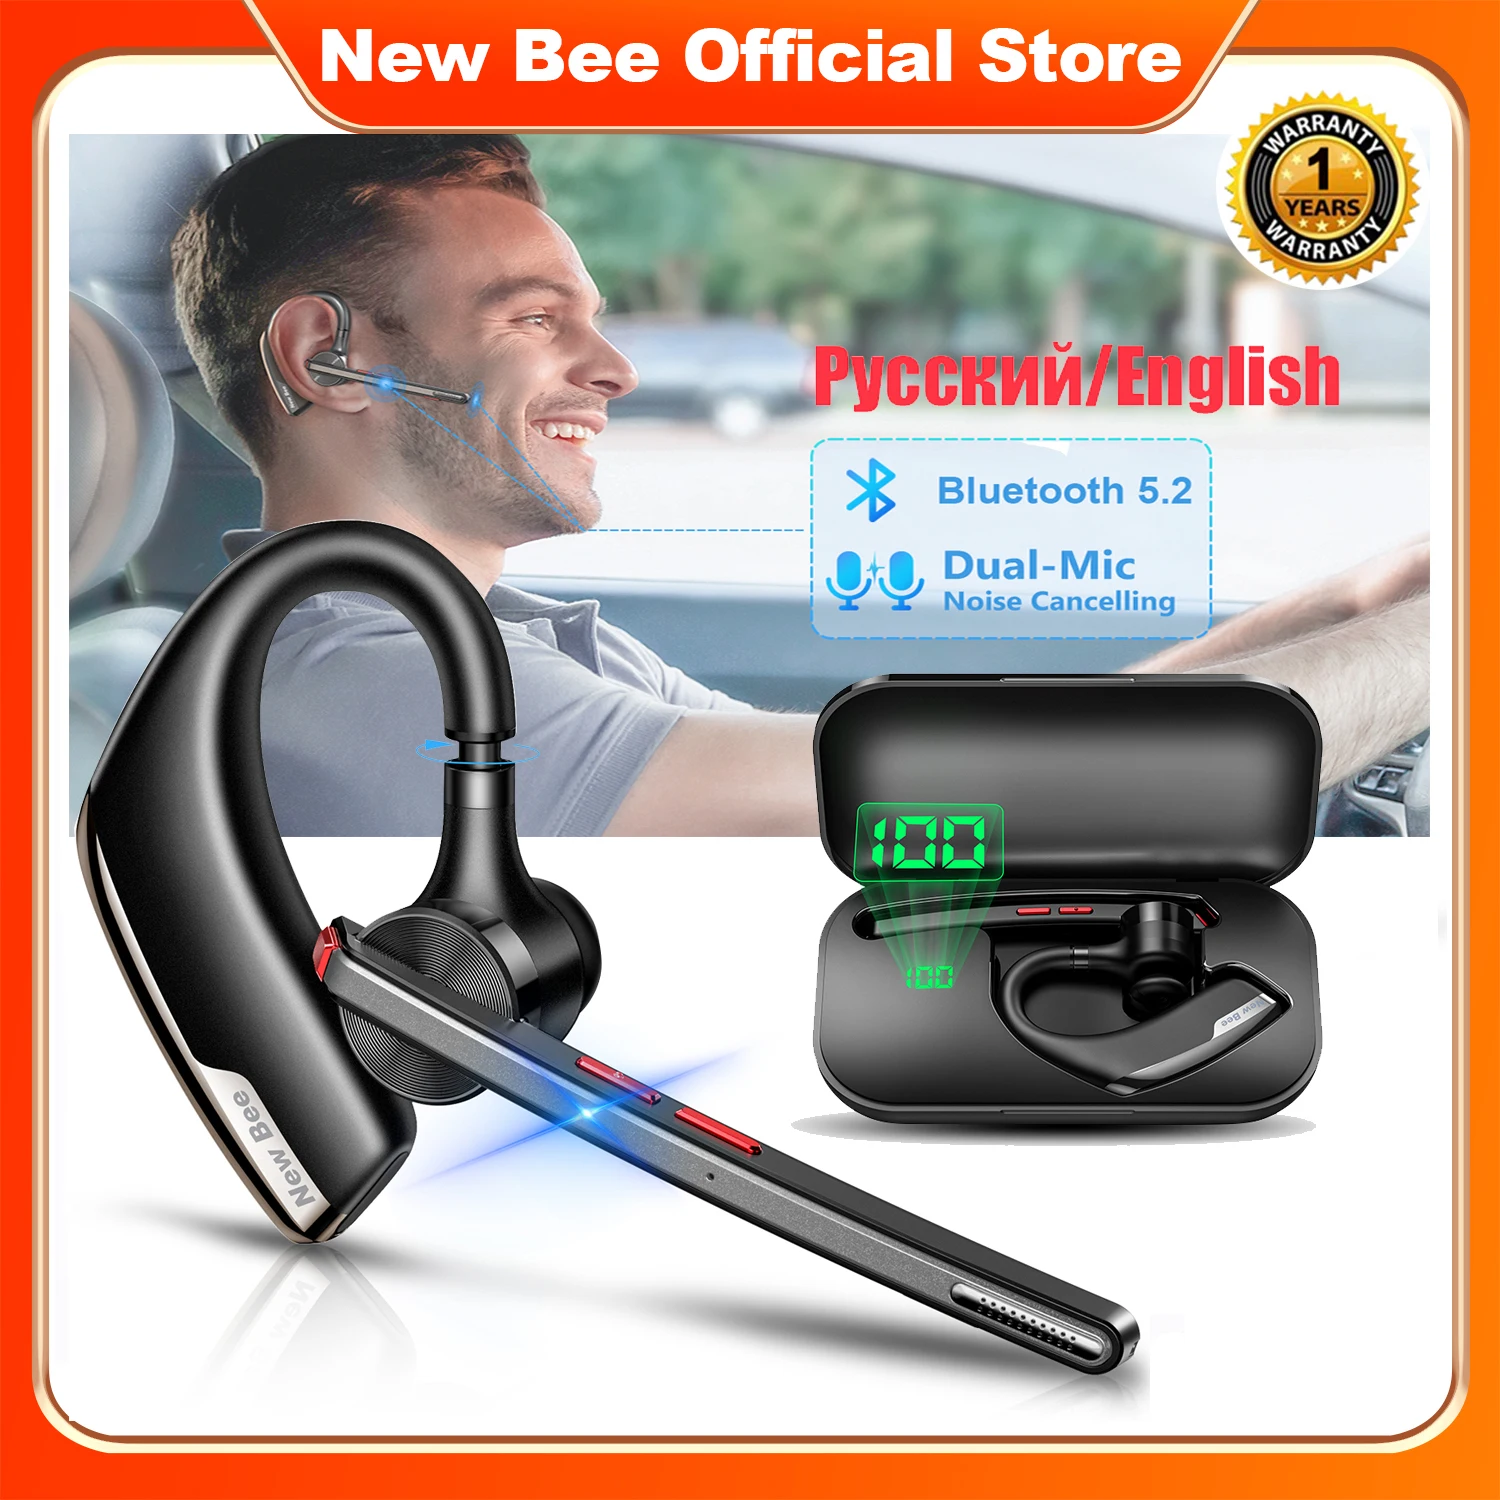 

New Bee M51 Wireless Bluetooth Headset Earphones 5.2 Headphone with Dual-Mic CVC8.0 Noise Cancelling Handsfree Business Earpiece